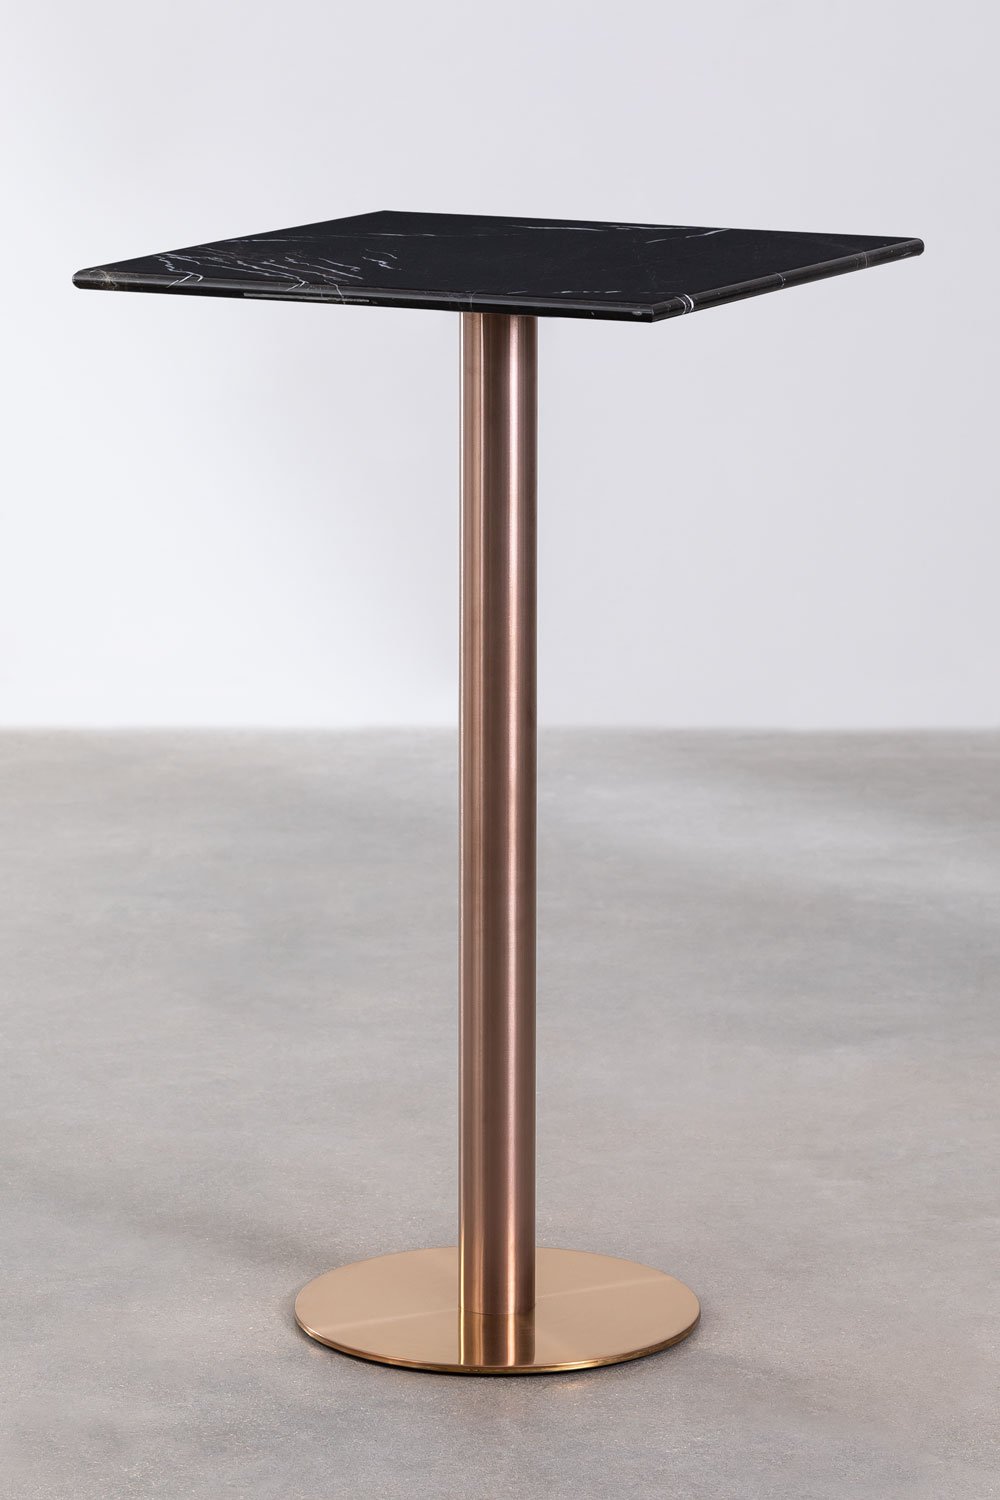 Table Haute de Bar Carrée en Marbre (60x60 cm) Cosmopolitan, image de la galerie 1